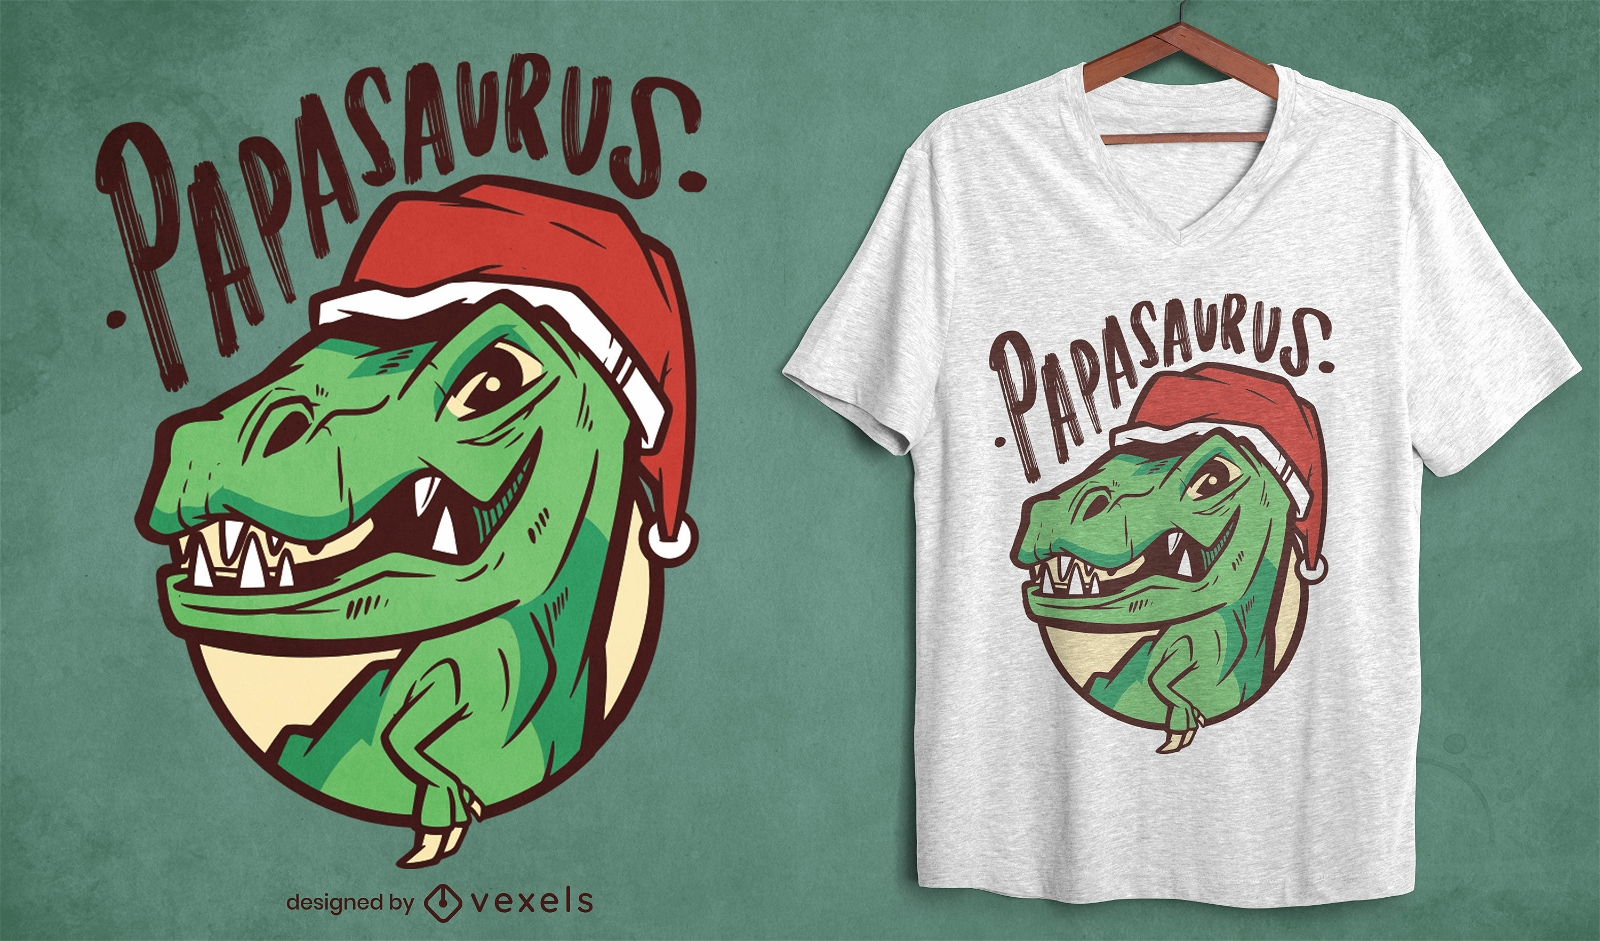 Papasaurus t-rex Christmas t-shirt design